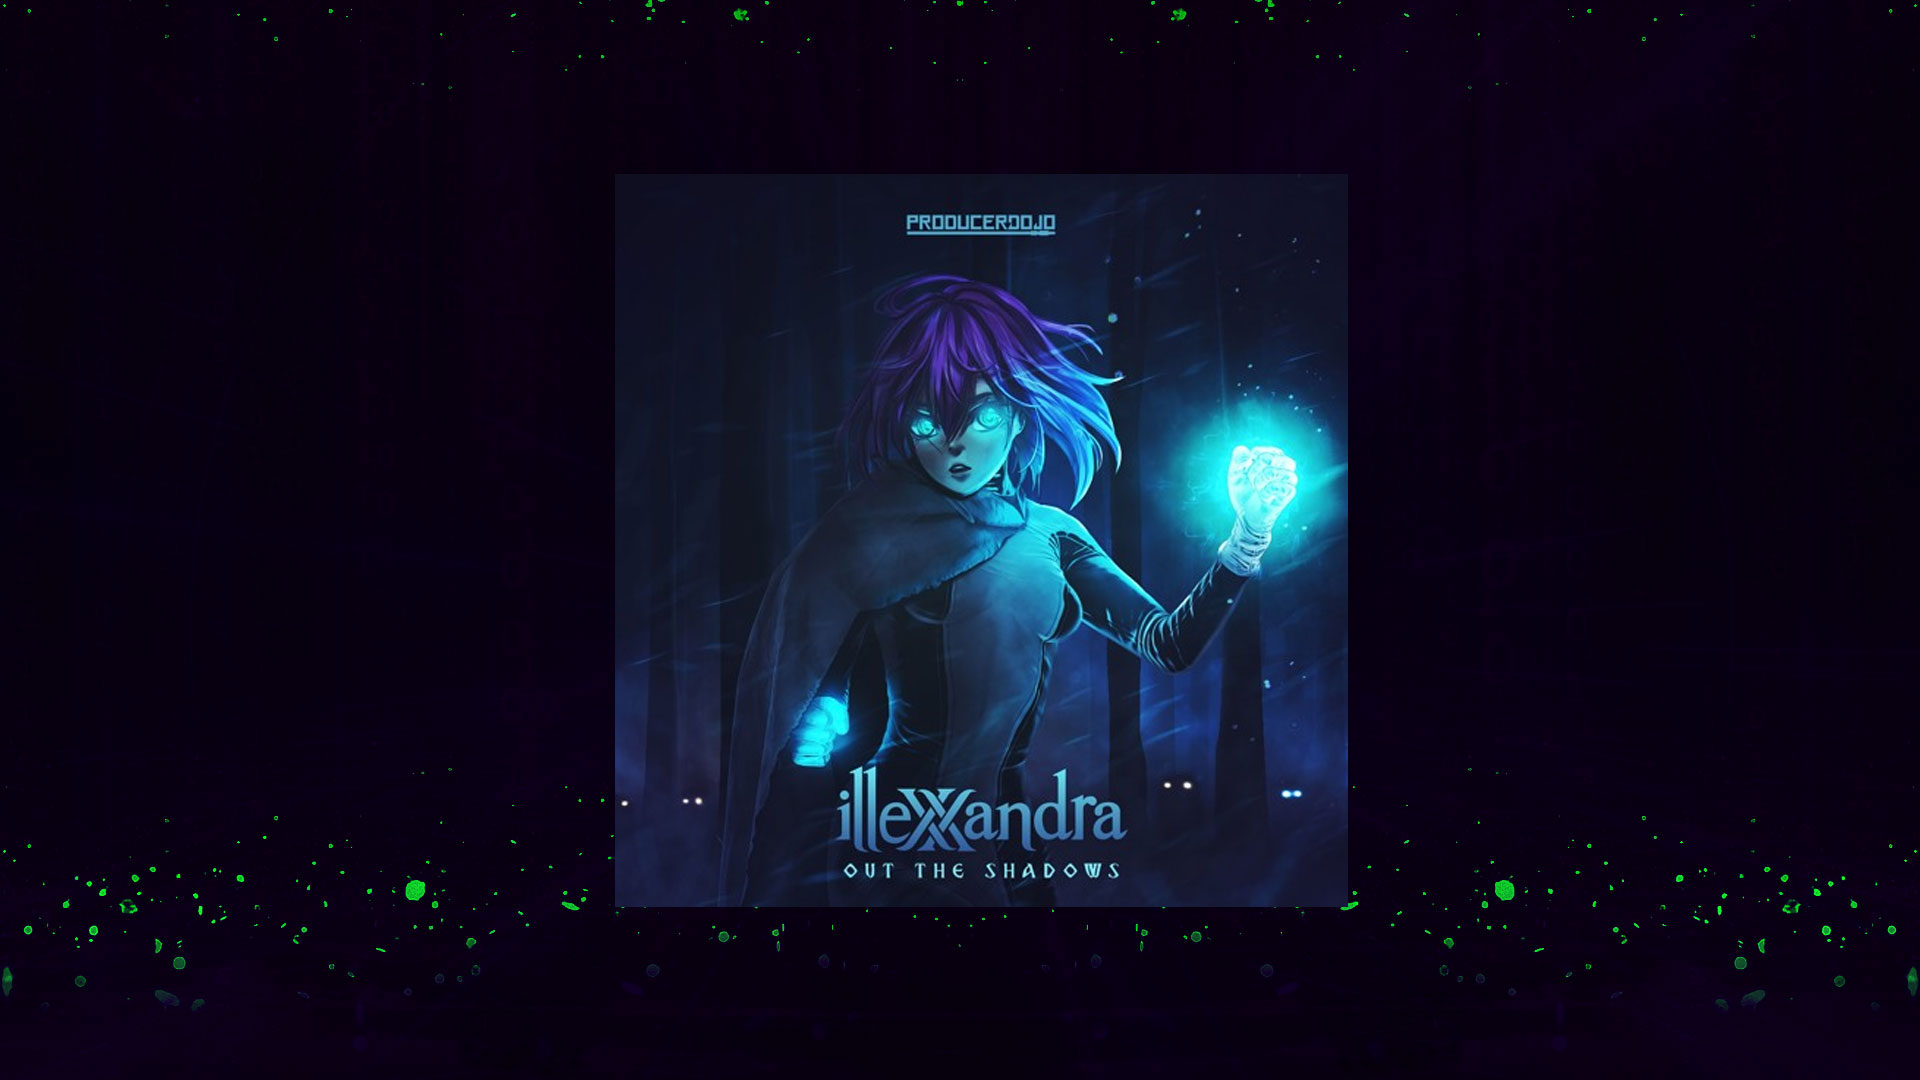 New EDM Music release illexandria